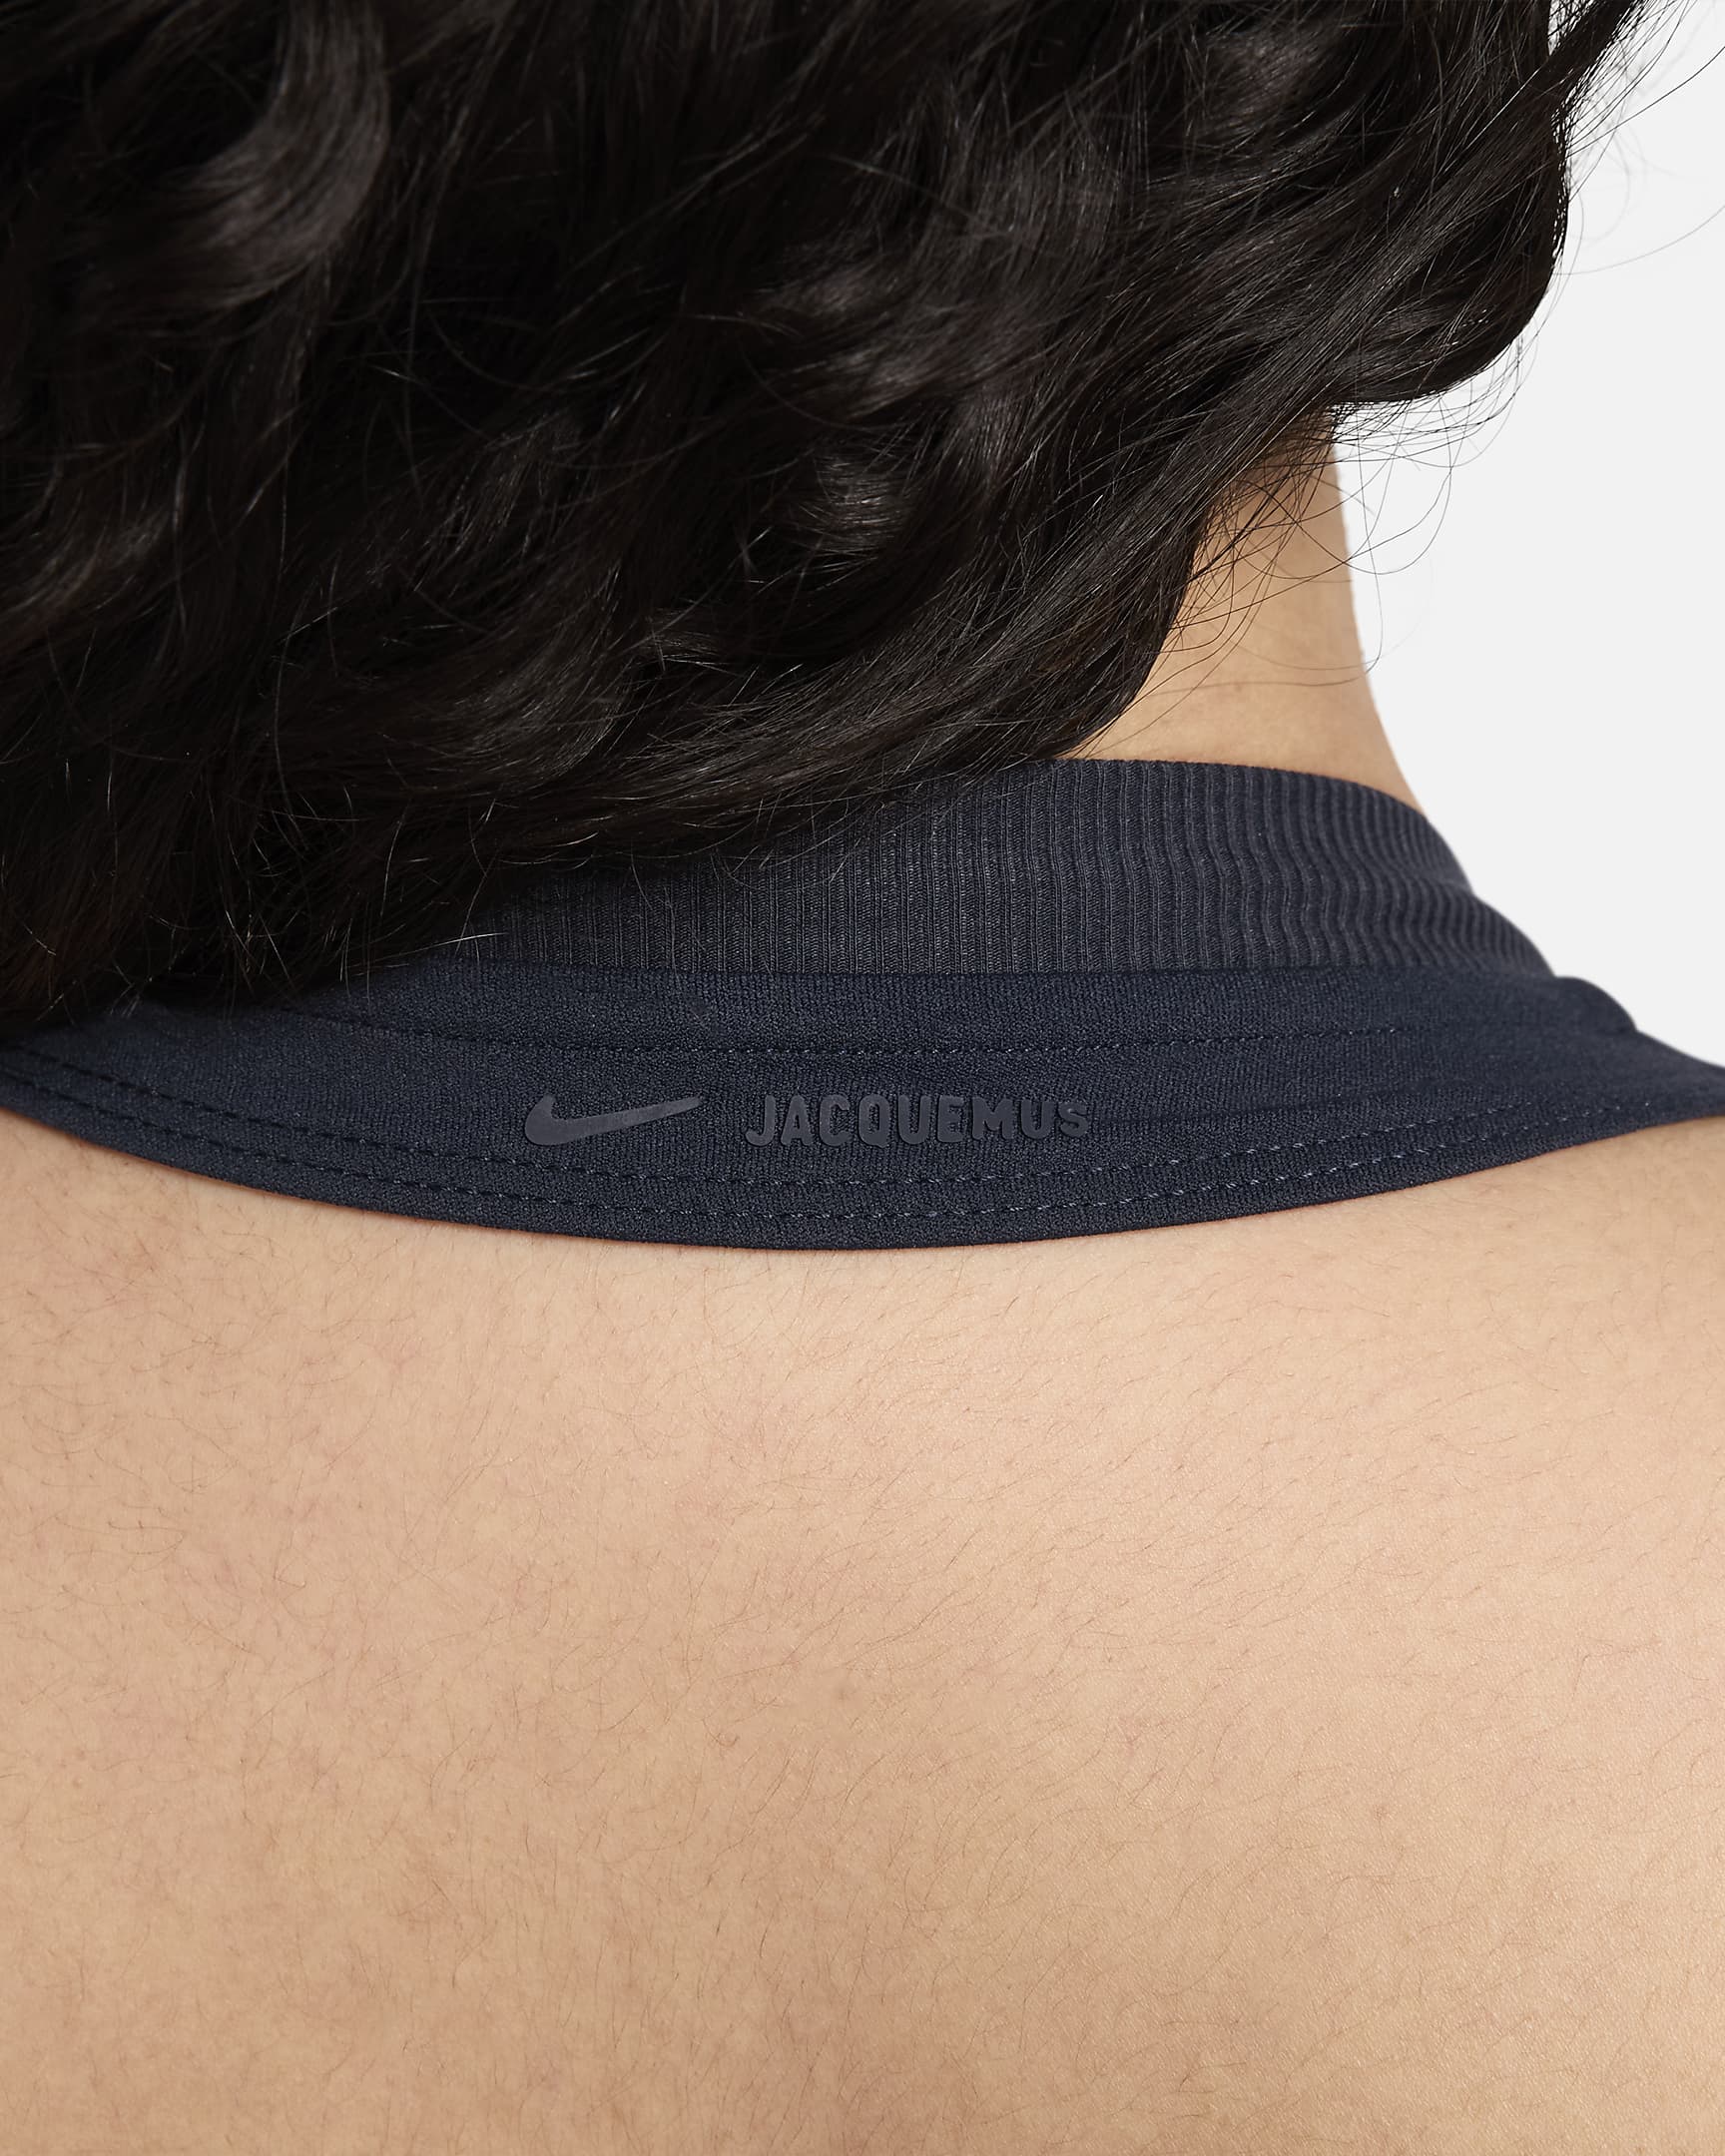 Nike x Jacquemus Women's Halter Top. Nike HU